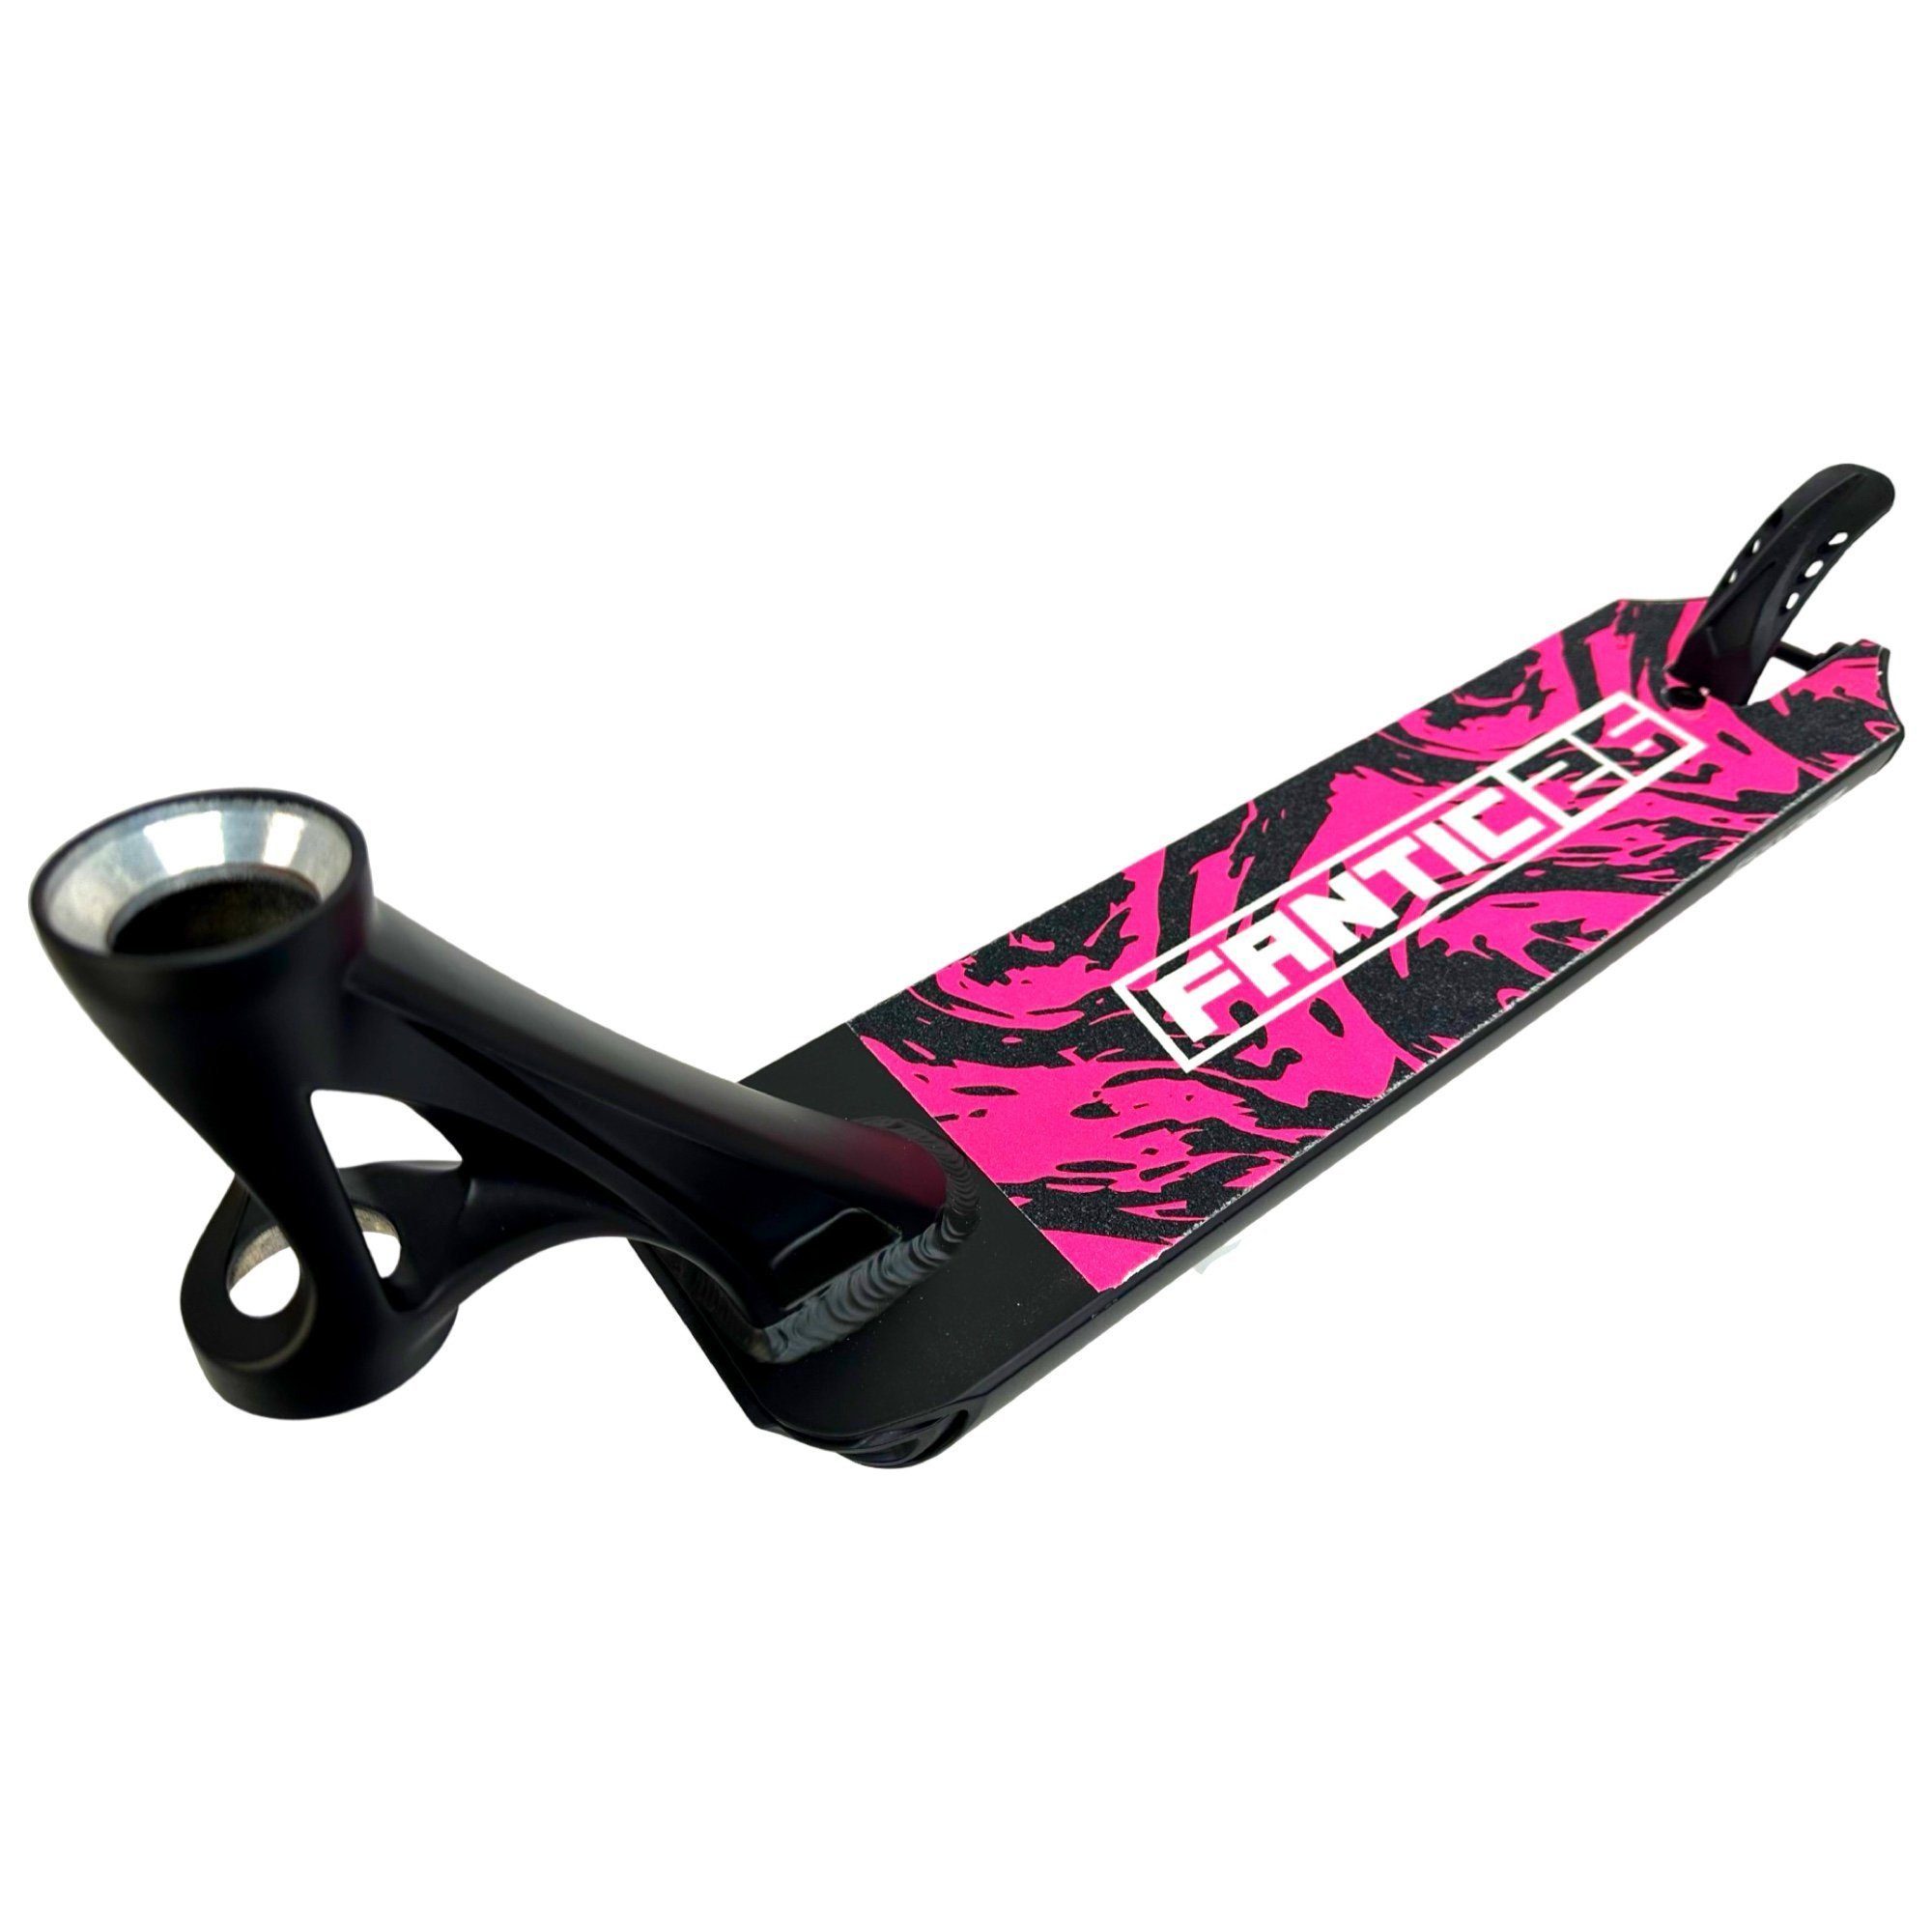 Schwarz/Pink Stuntscooter 58,5cm x Fantic26 Swirl Stunt-Scooter 15,5cm Fantic26 Griptape